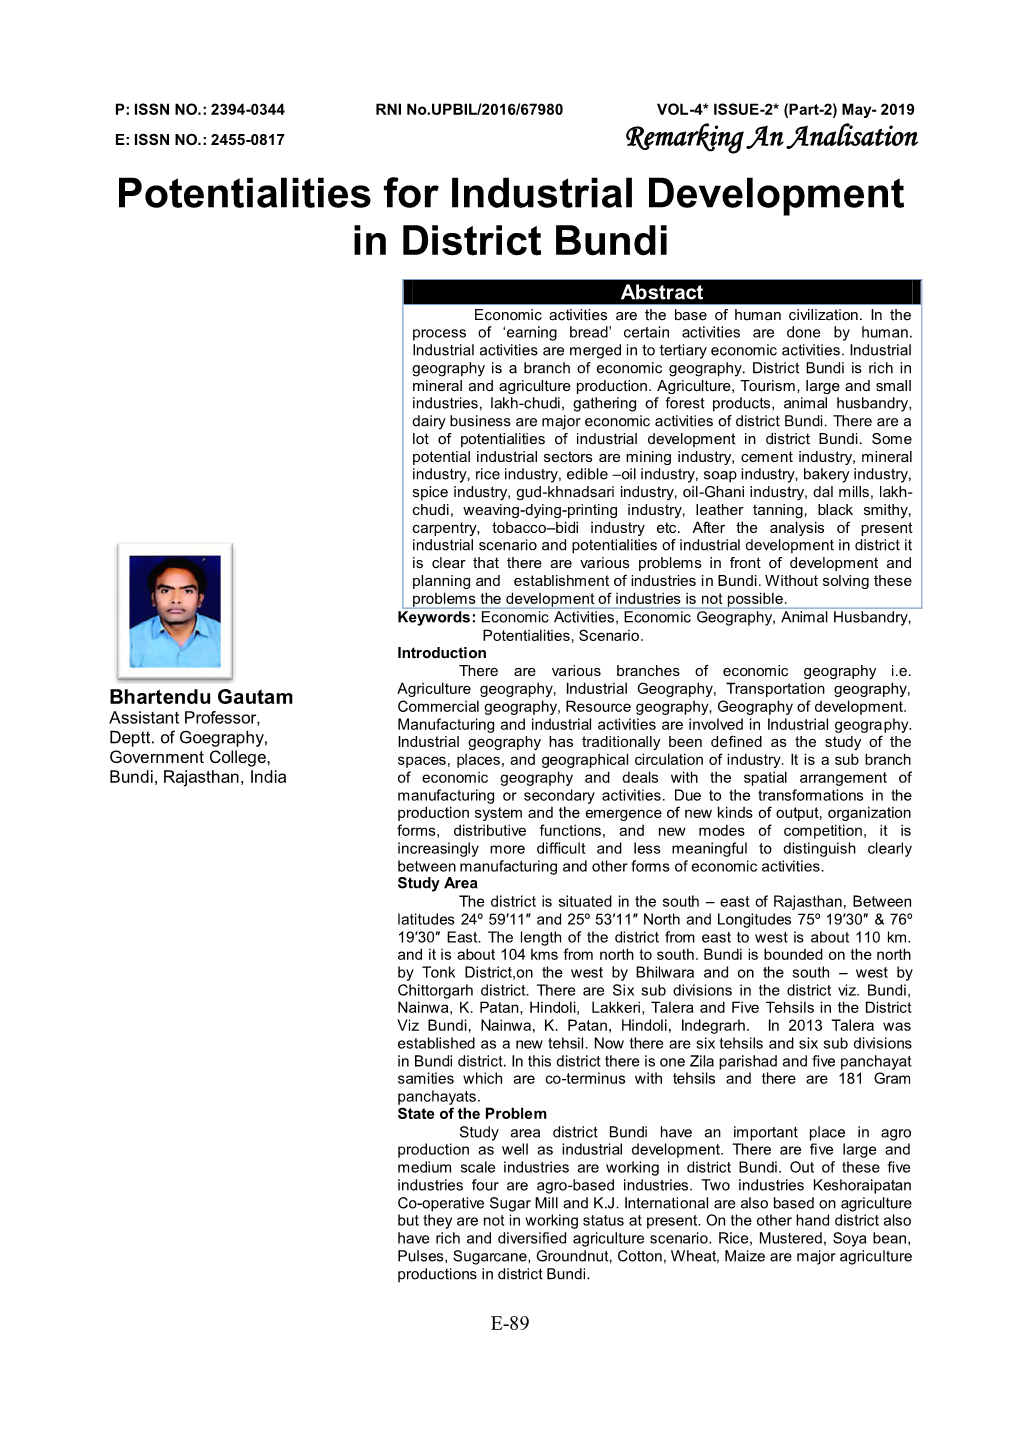 Potentialities for Industrial Development in District Bundi Bhartendu Gautam, Bundi, Rajasthan, India